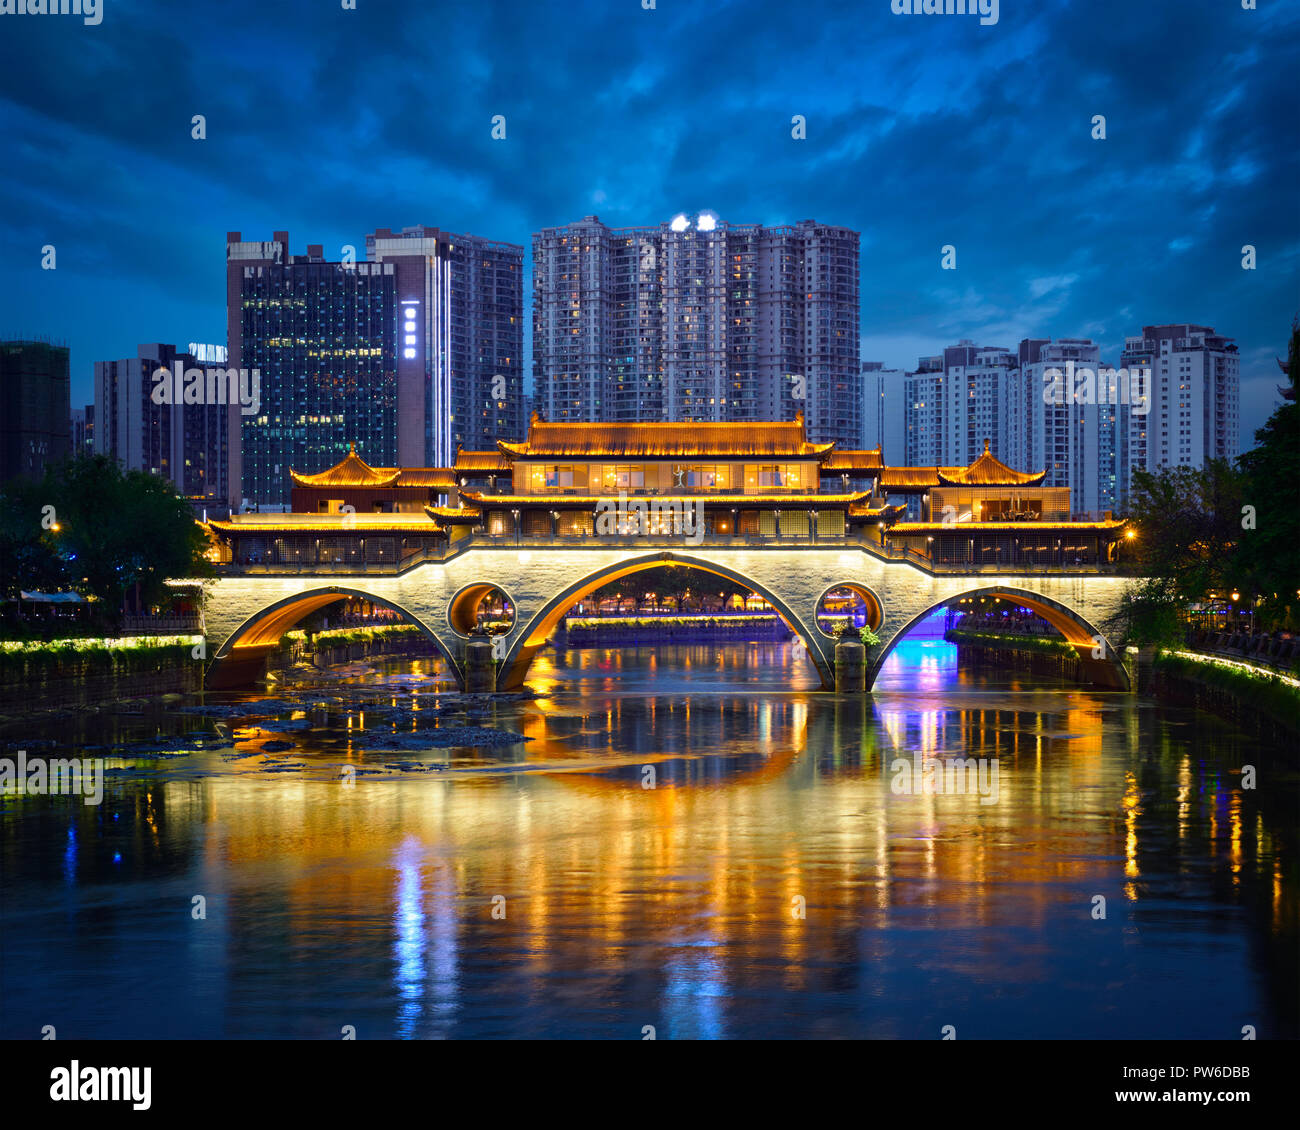 Anshun bridge at night, Chengdu, Chine Banque D'Images